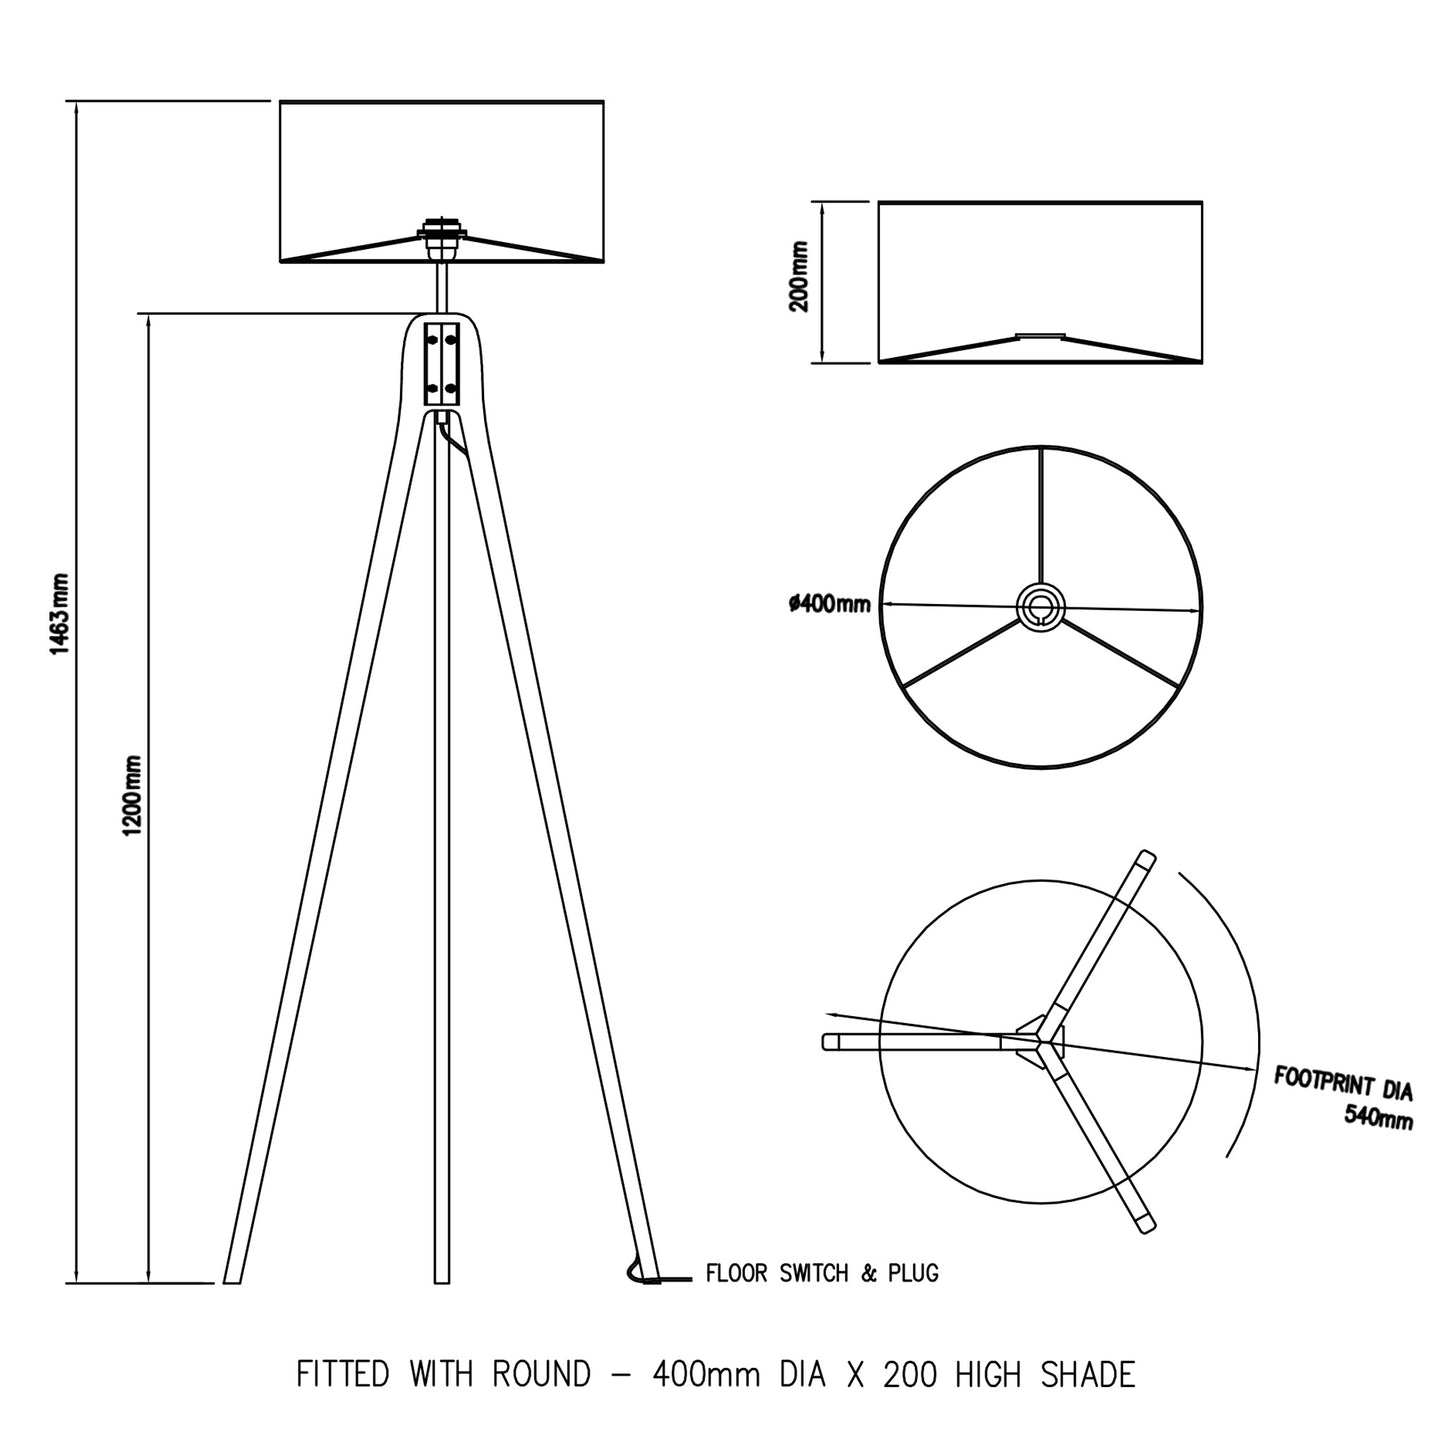 Oak Tripod Floor Lamp - W05 ~ Cranes